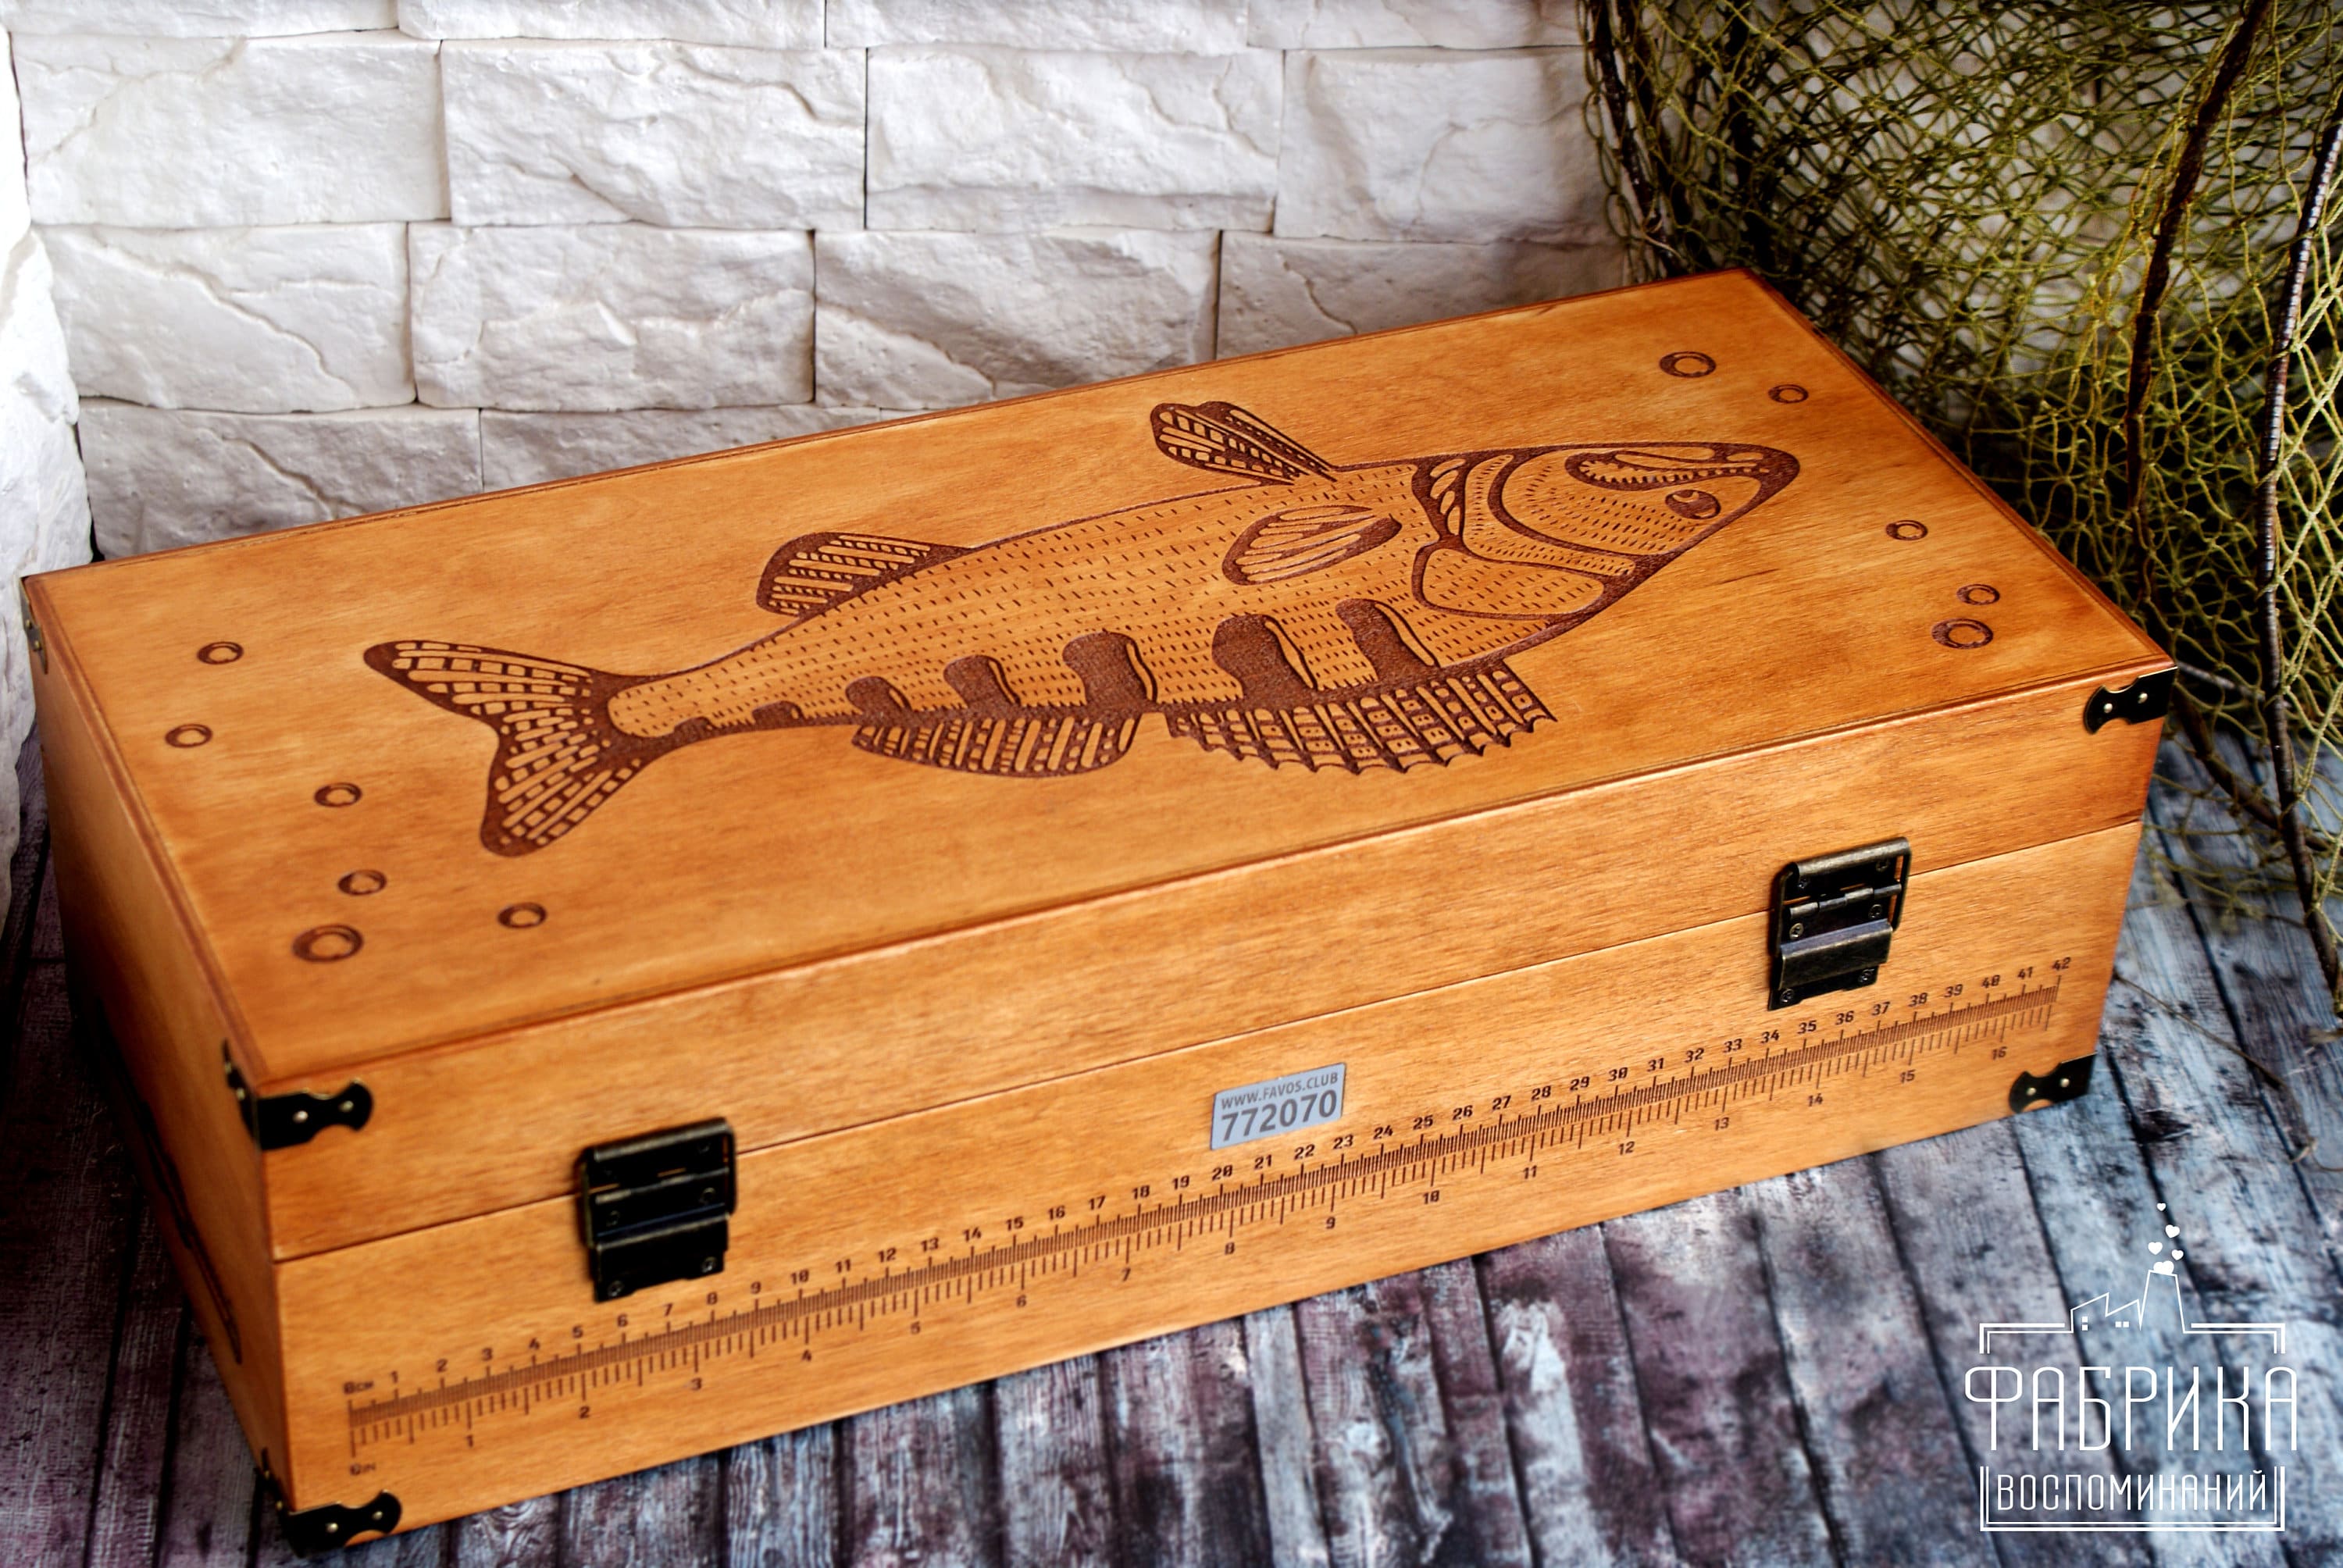 Personalized Handmade Wood Fishing Tackle Box mr. Zander, Tackle